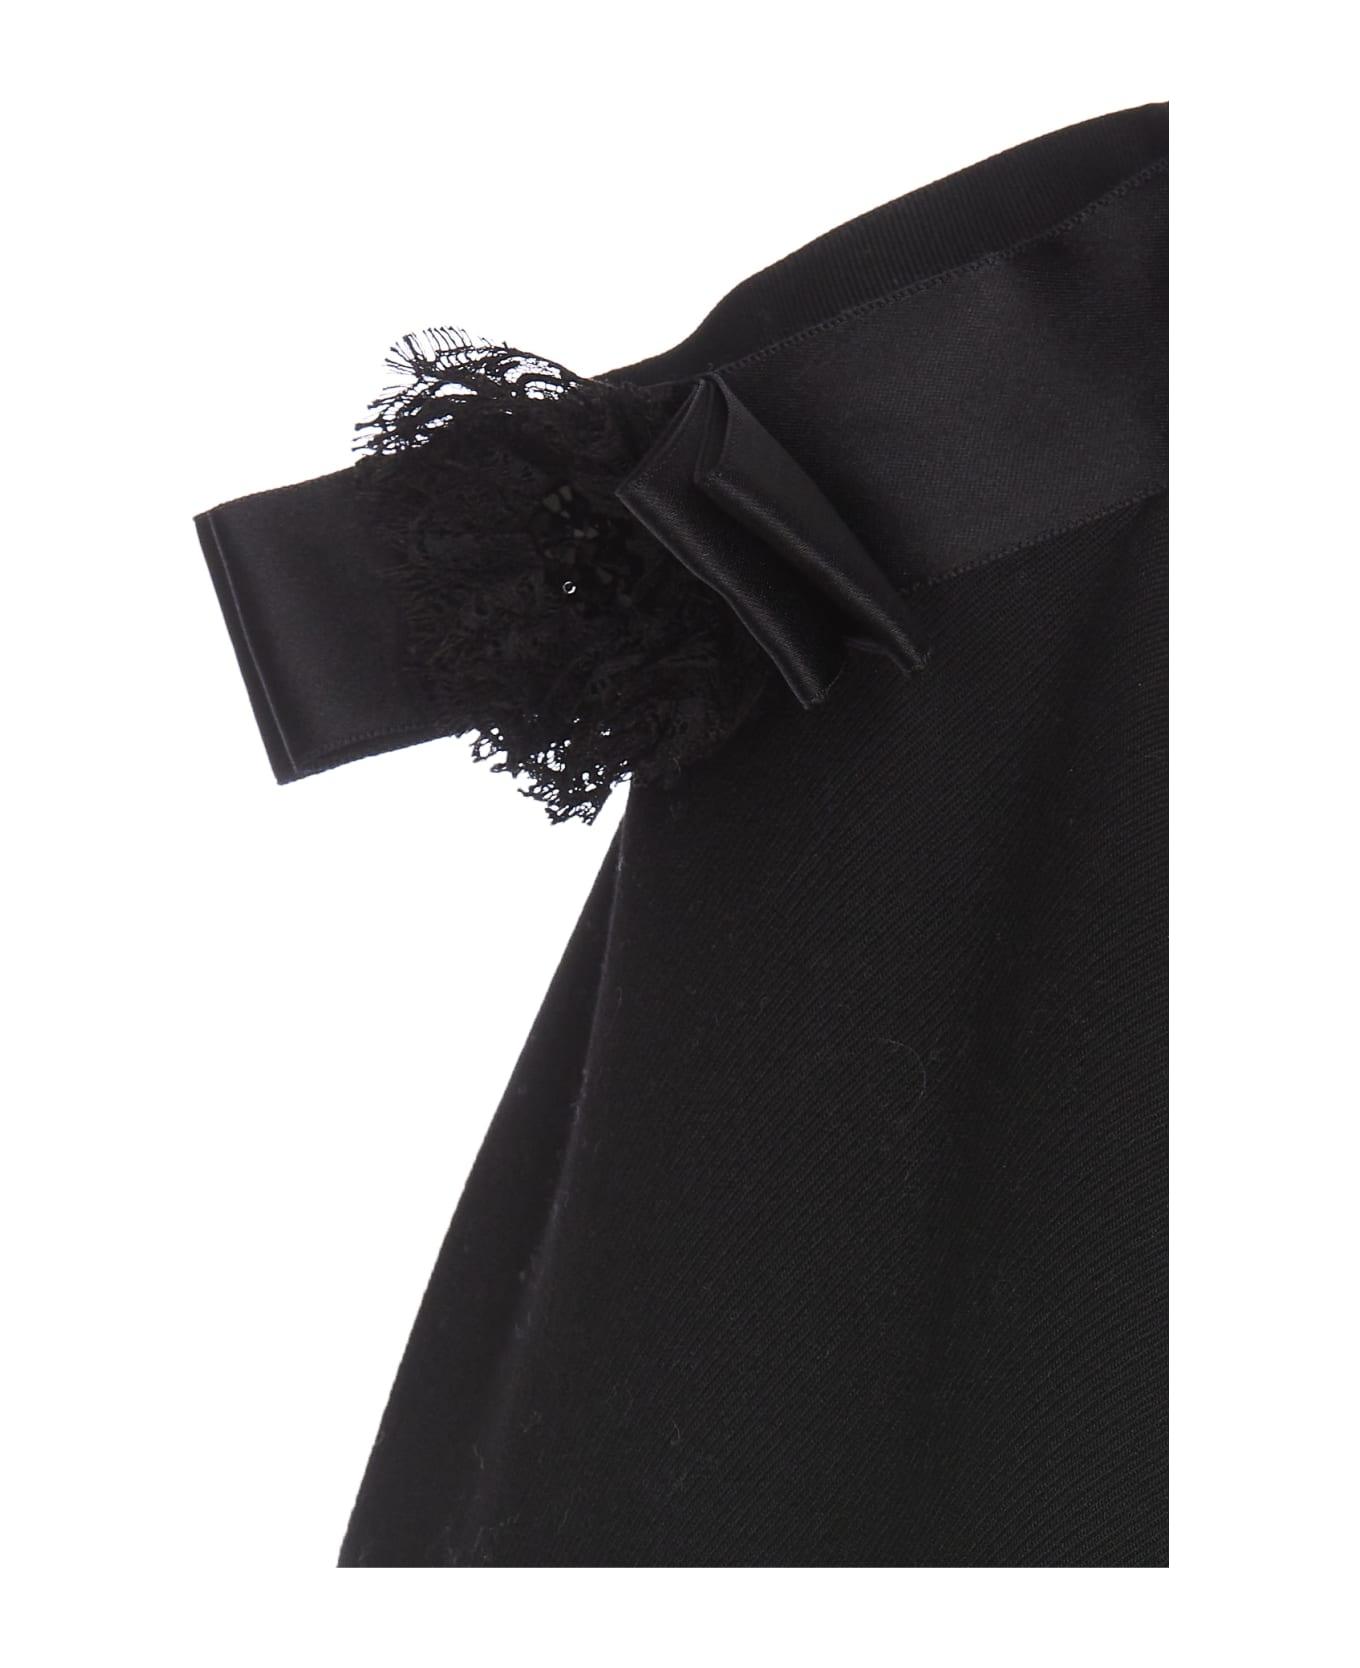 Dolce & Gabbana Short Dress With Neckline On Back - Nero